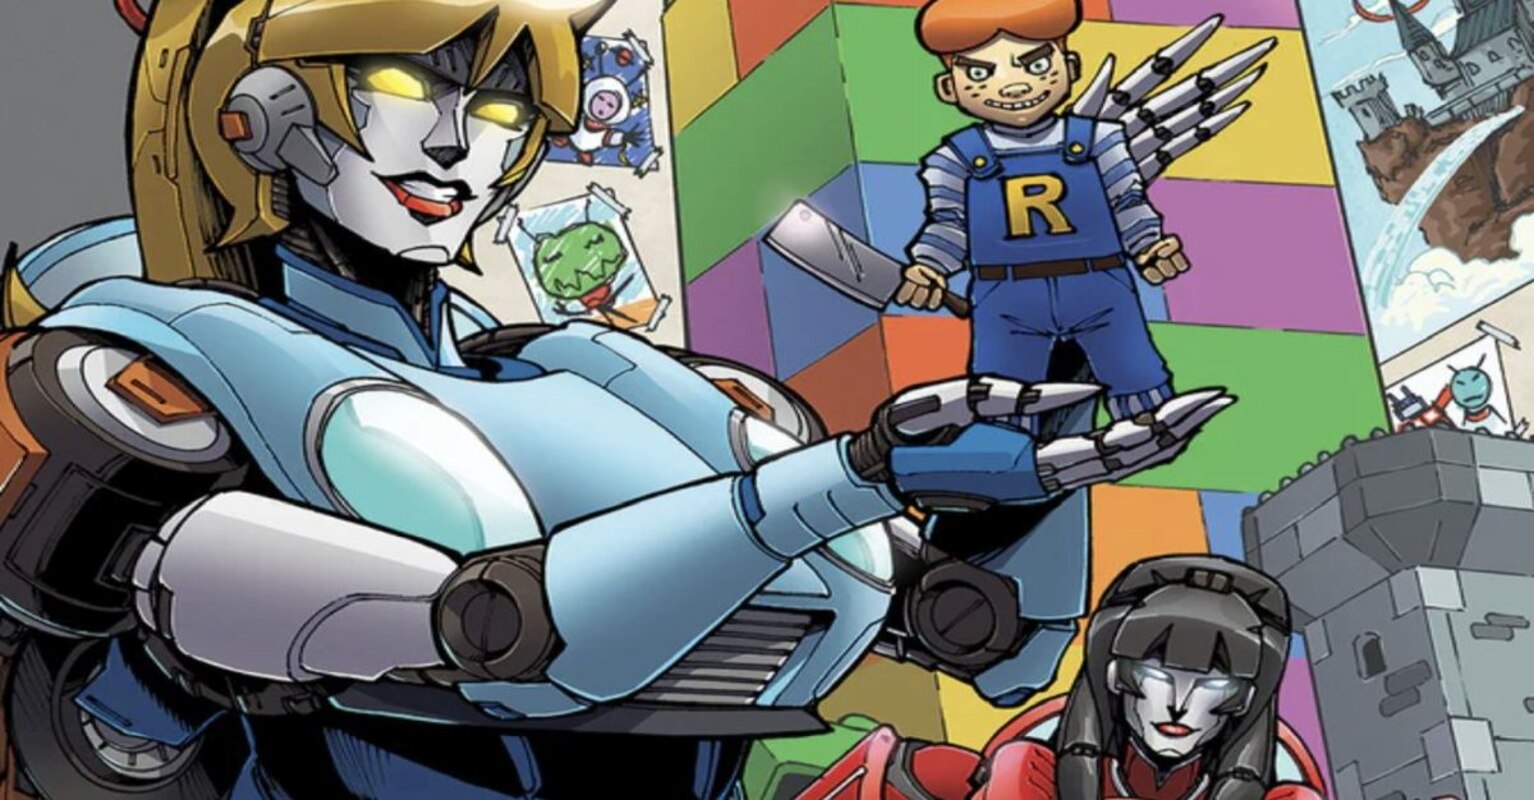 Archie X Transformers Betty & Veronica Bots 40th Anniversary Image by Alex Milne